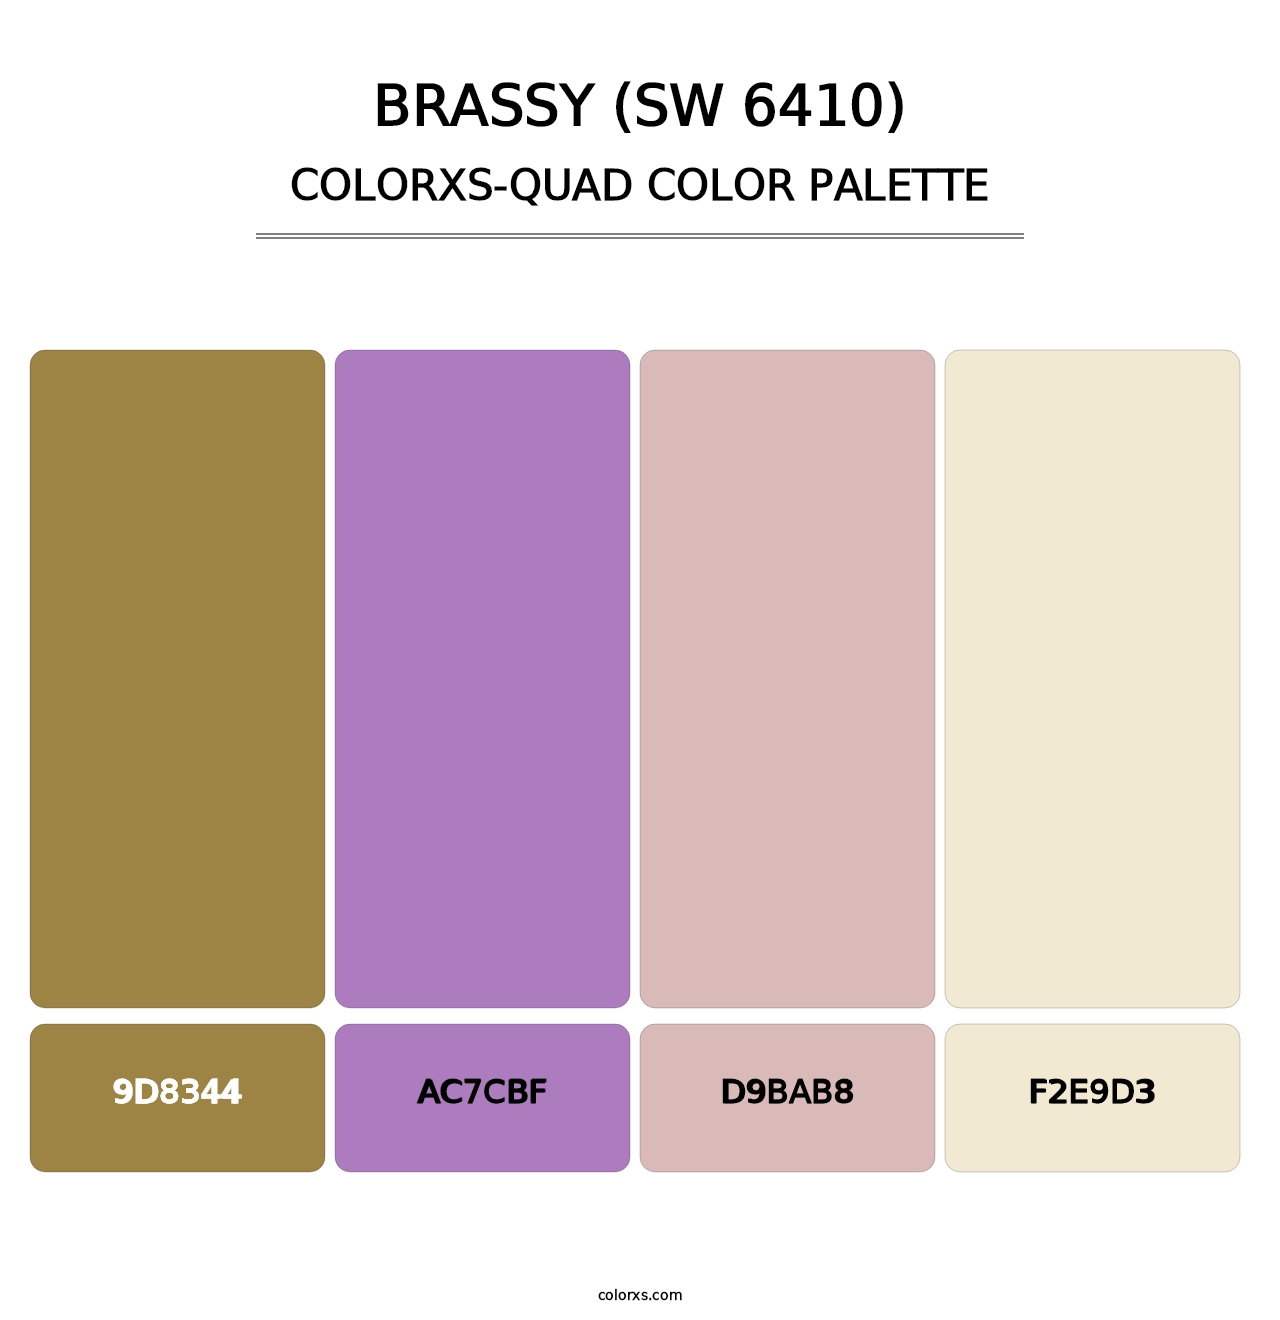 Brassy (SW 6410) - Colorxs Quad Palette